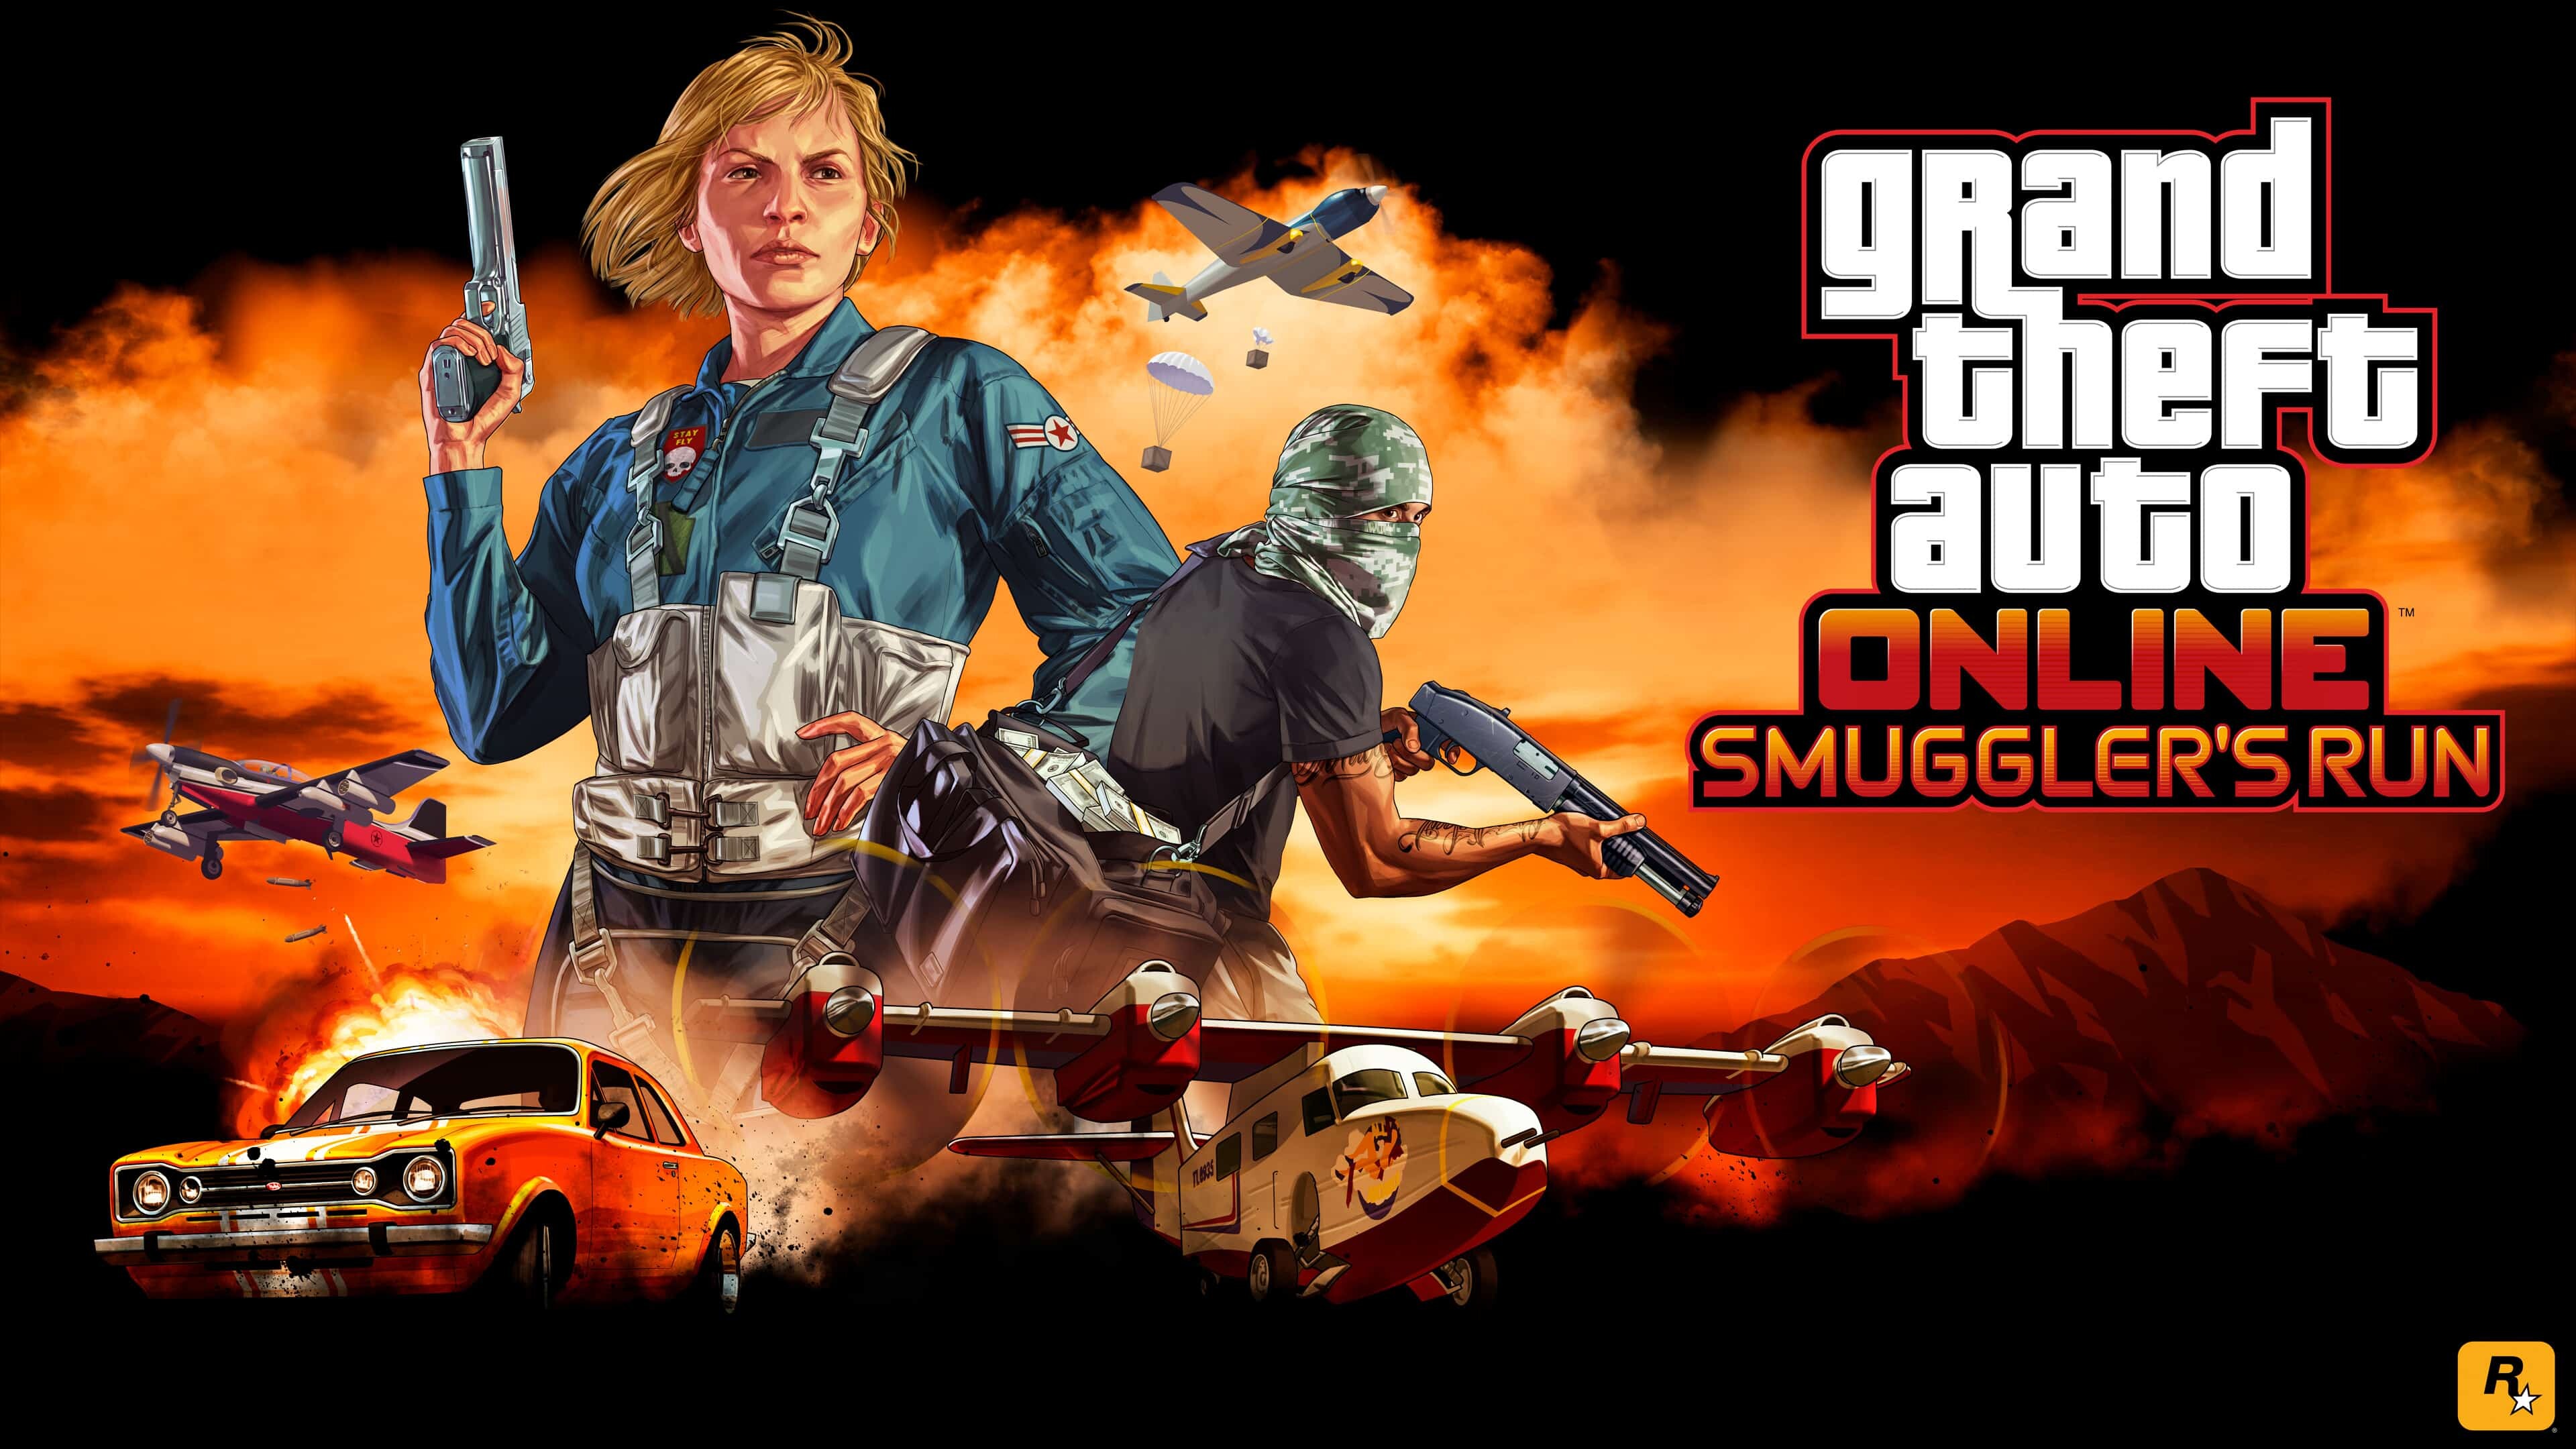 Grand Theft Auto 5: Smuggler's Run, A content update for GTA Online. 3840x2160 4K Wallpaper.